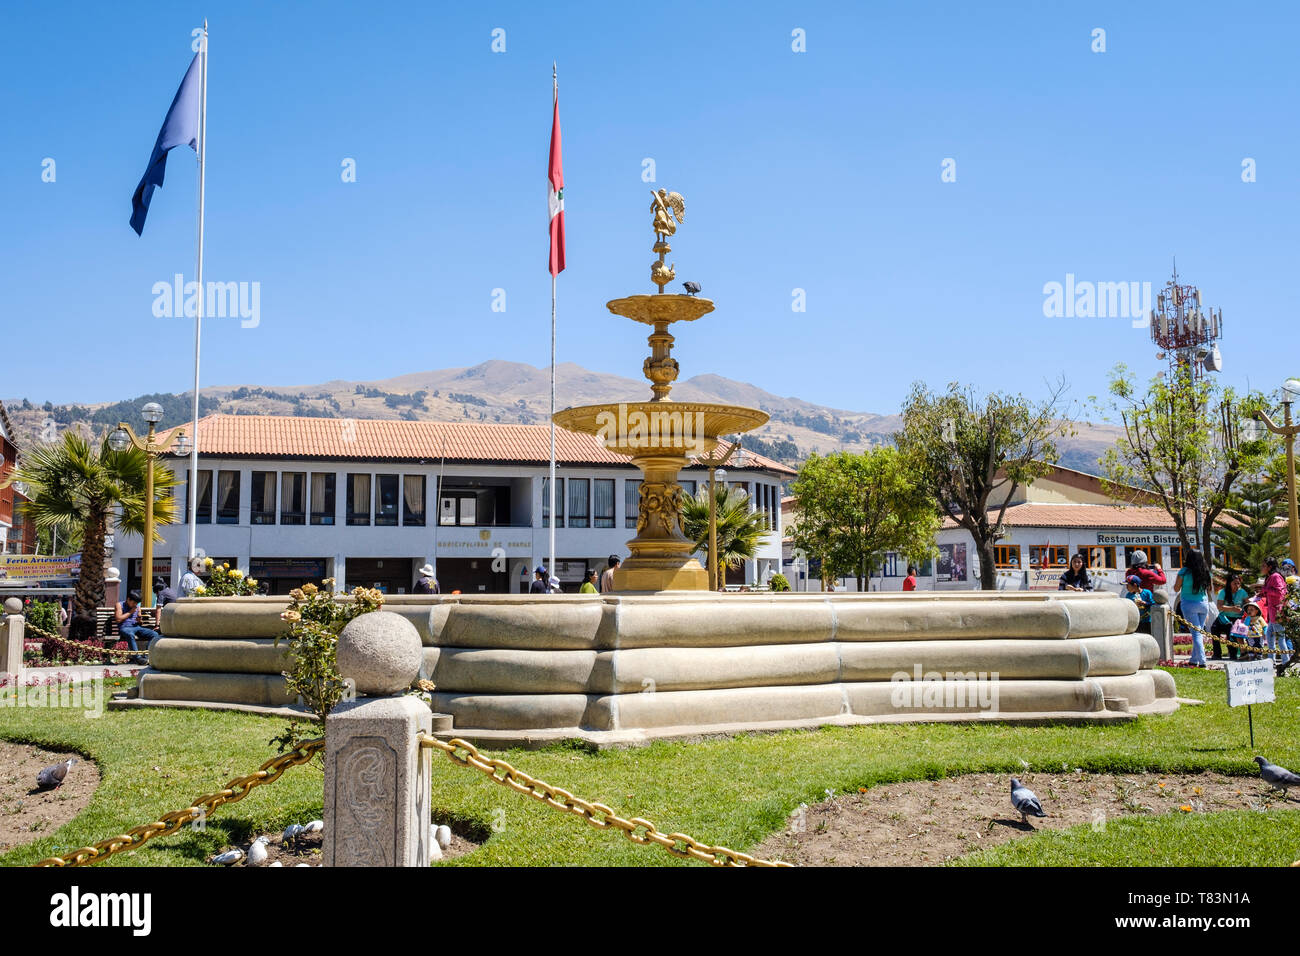 Fountain at Plaza de Armas or Main Square of Huaraz, Ancash Region, Peru Stock Photo